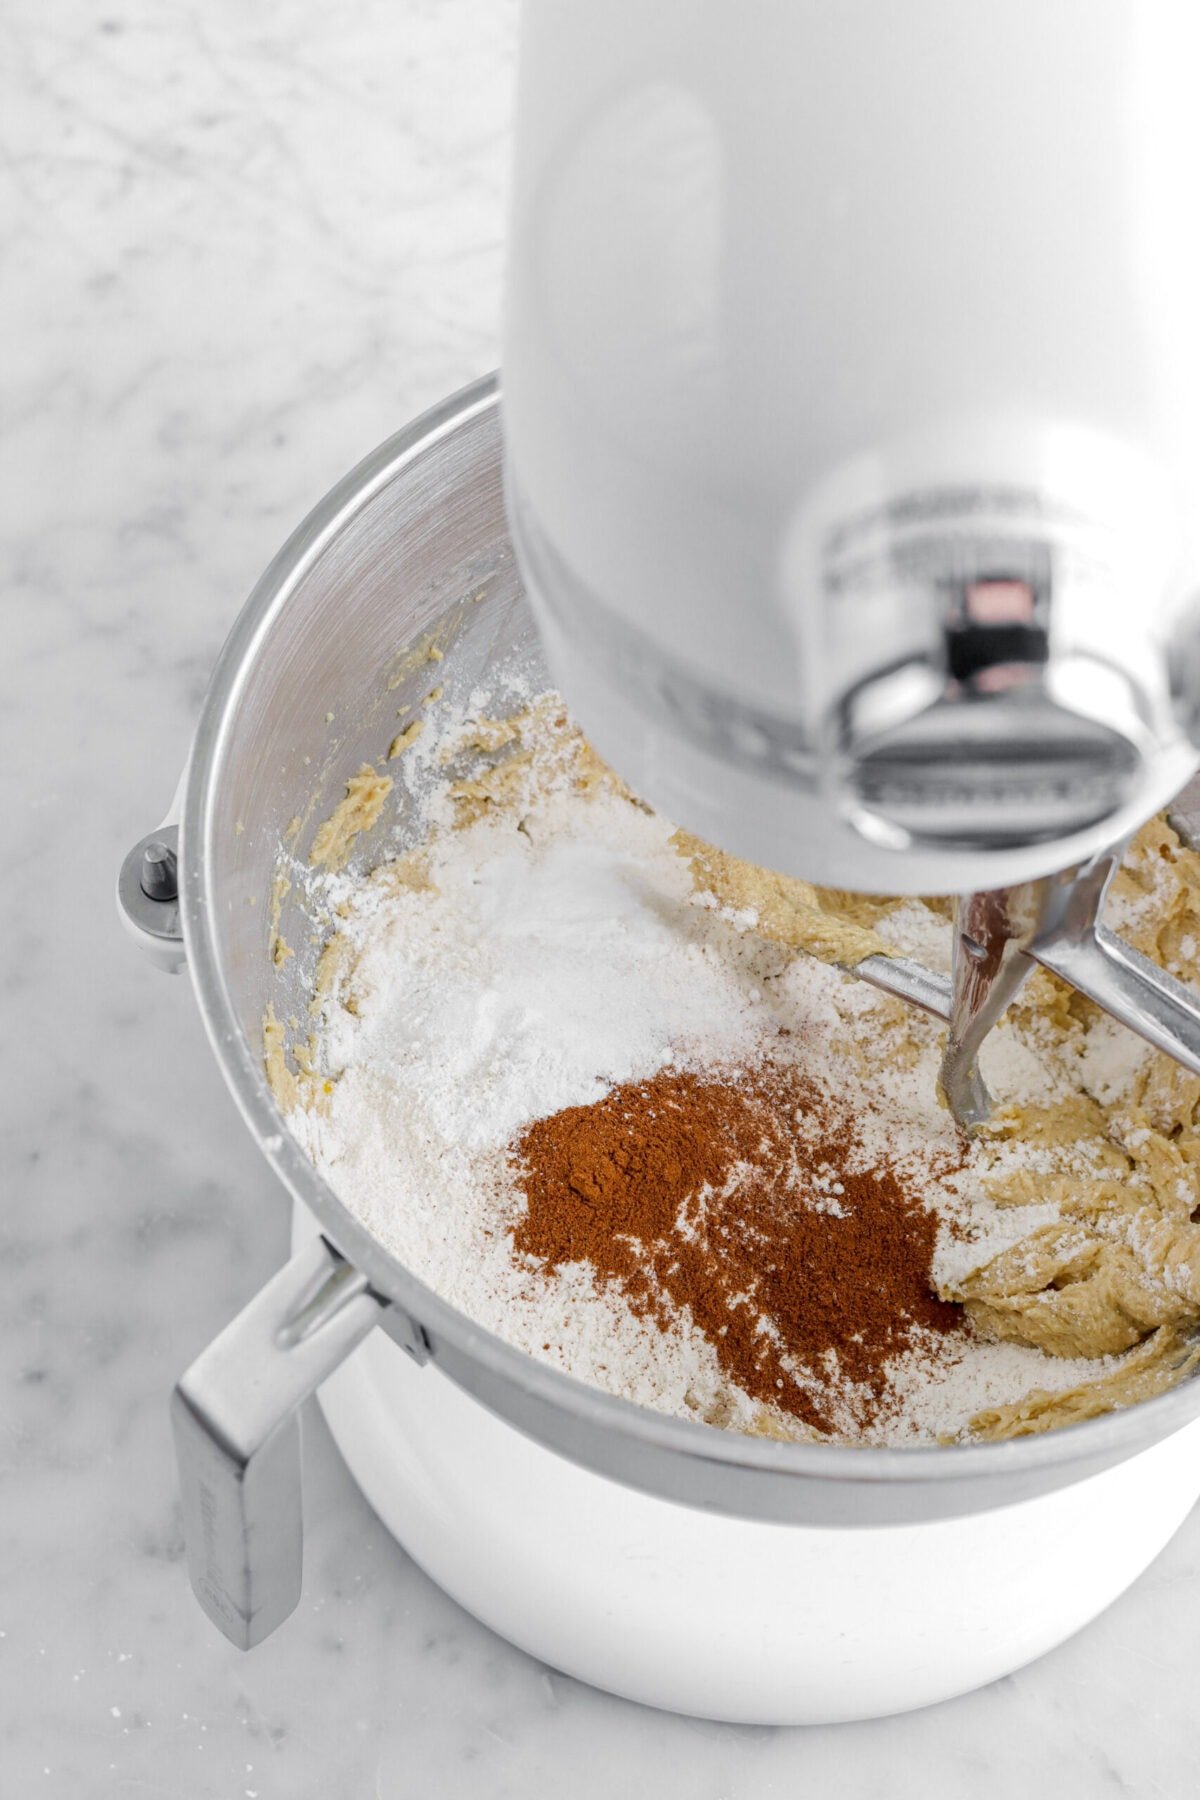 flour, cinnamon, baking powder, baking soda, and salt added to butter mixture.